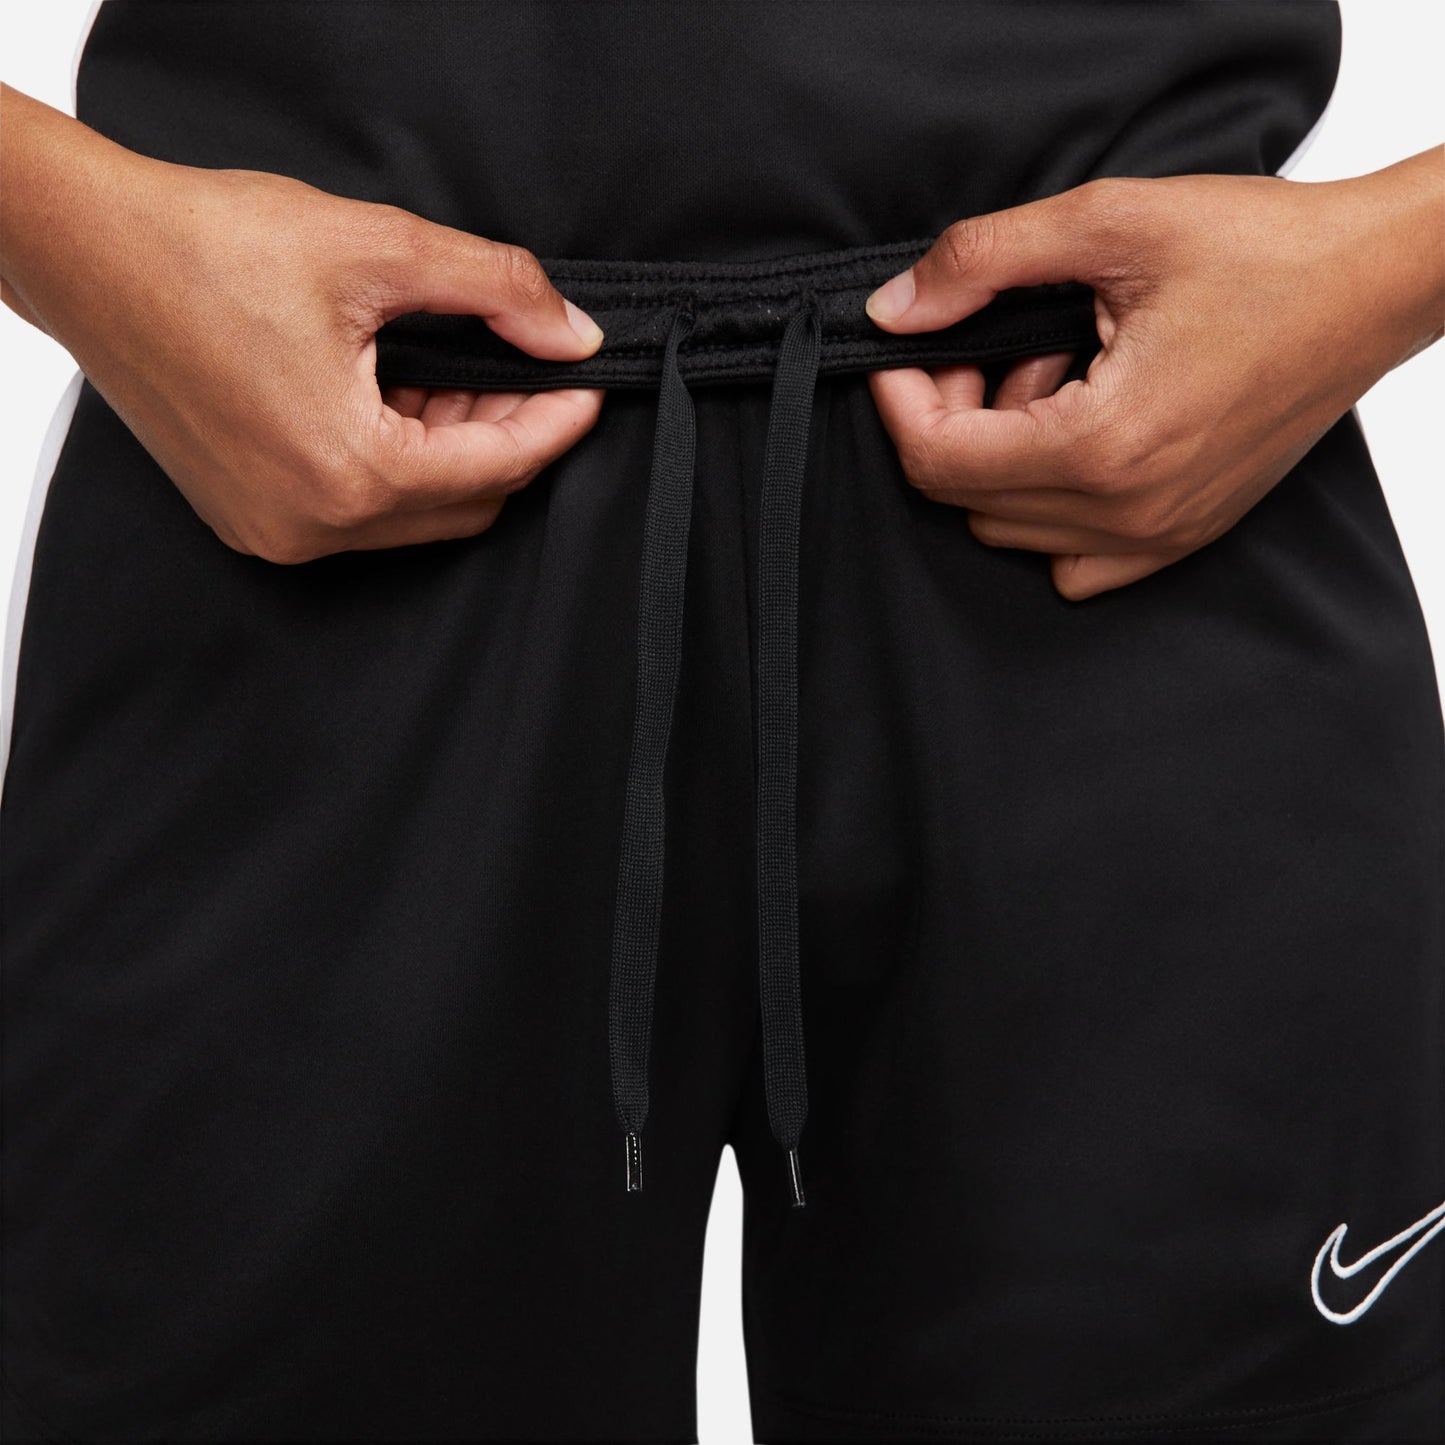 Nike Dri-FIT Academy Women's Football Shorts